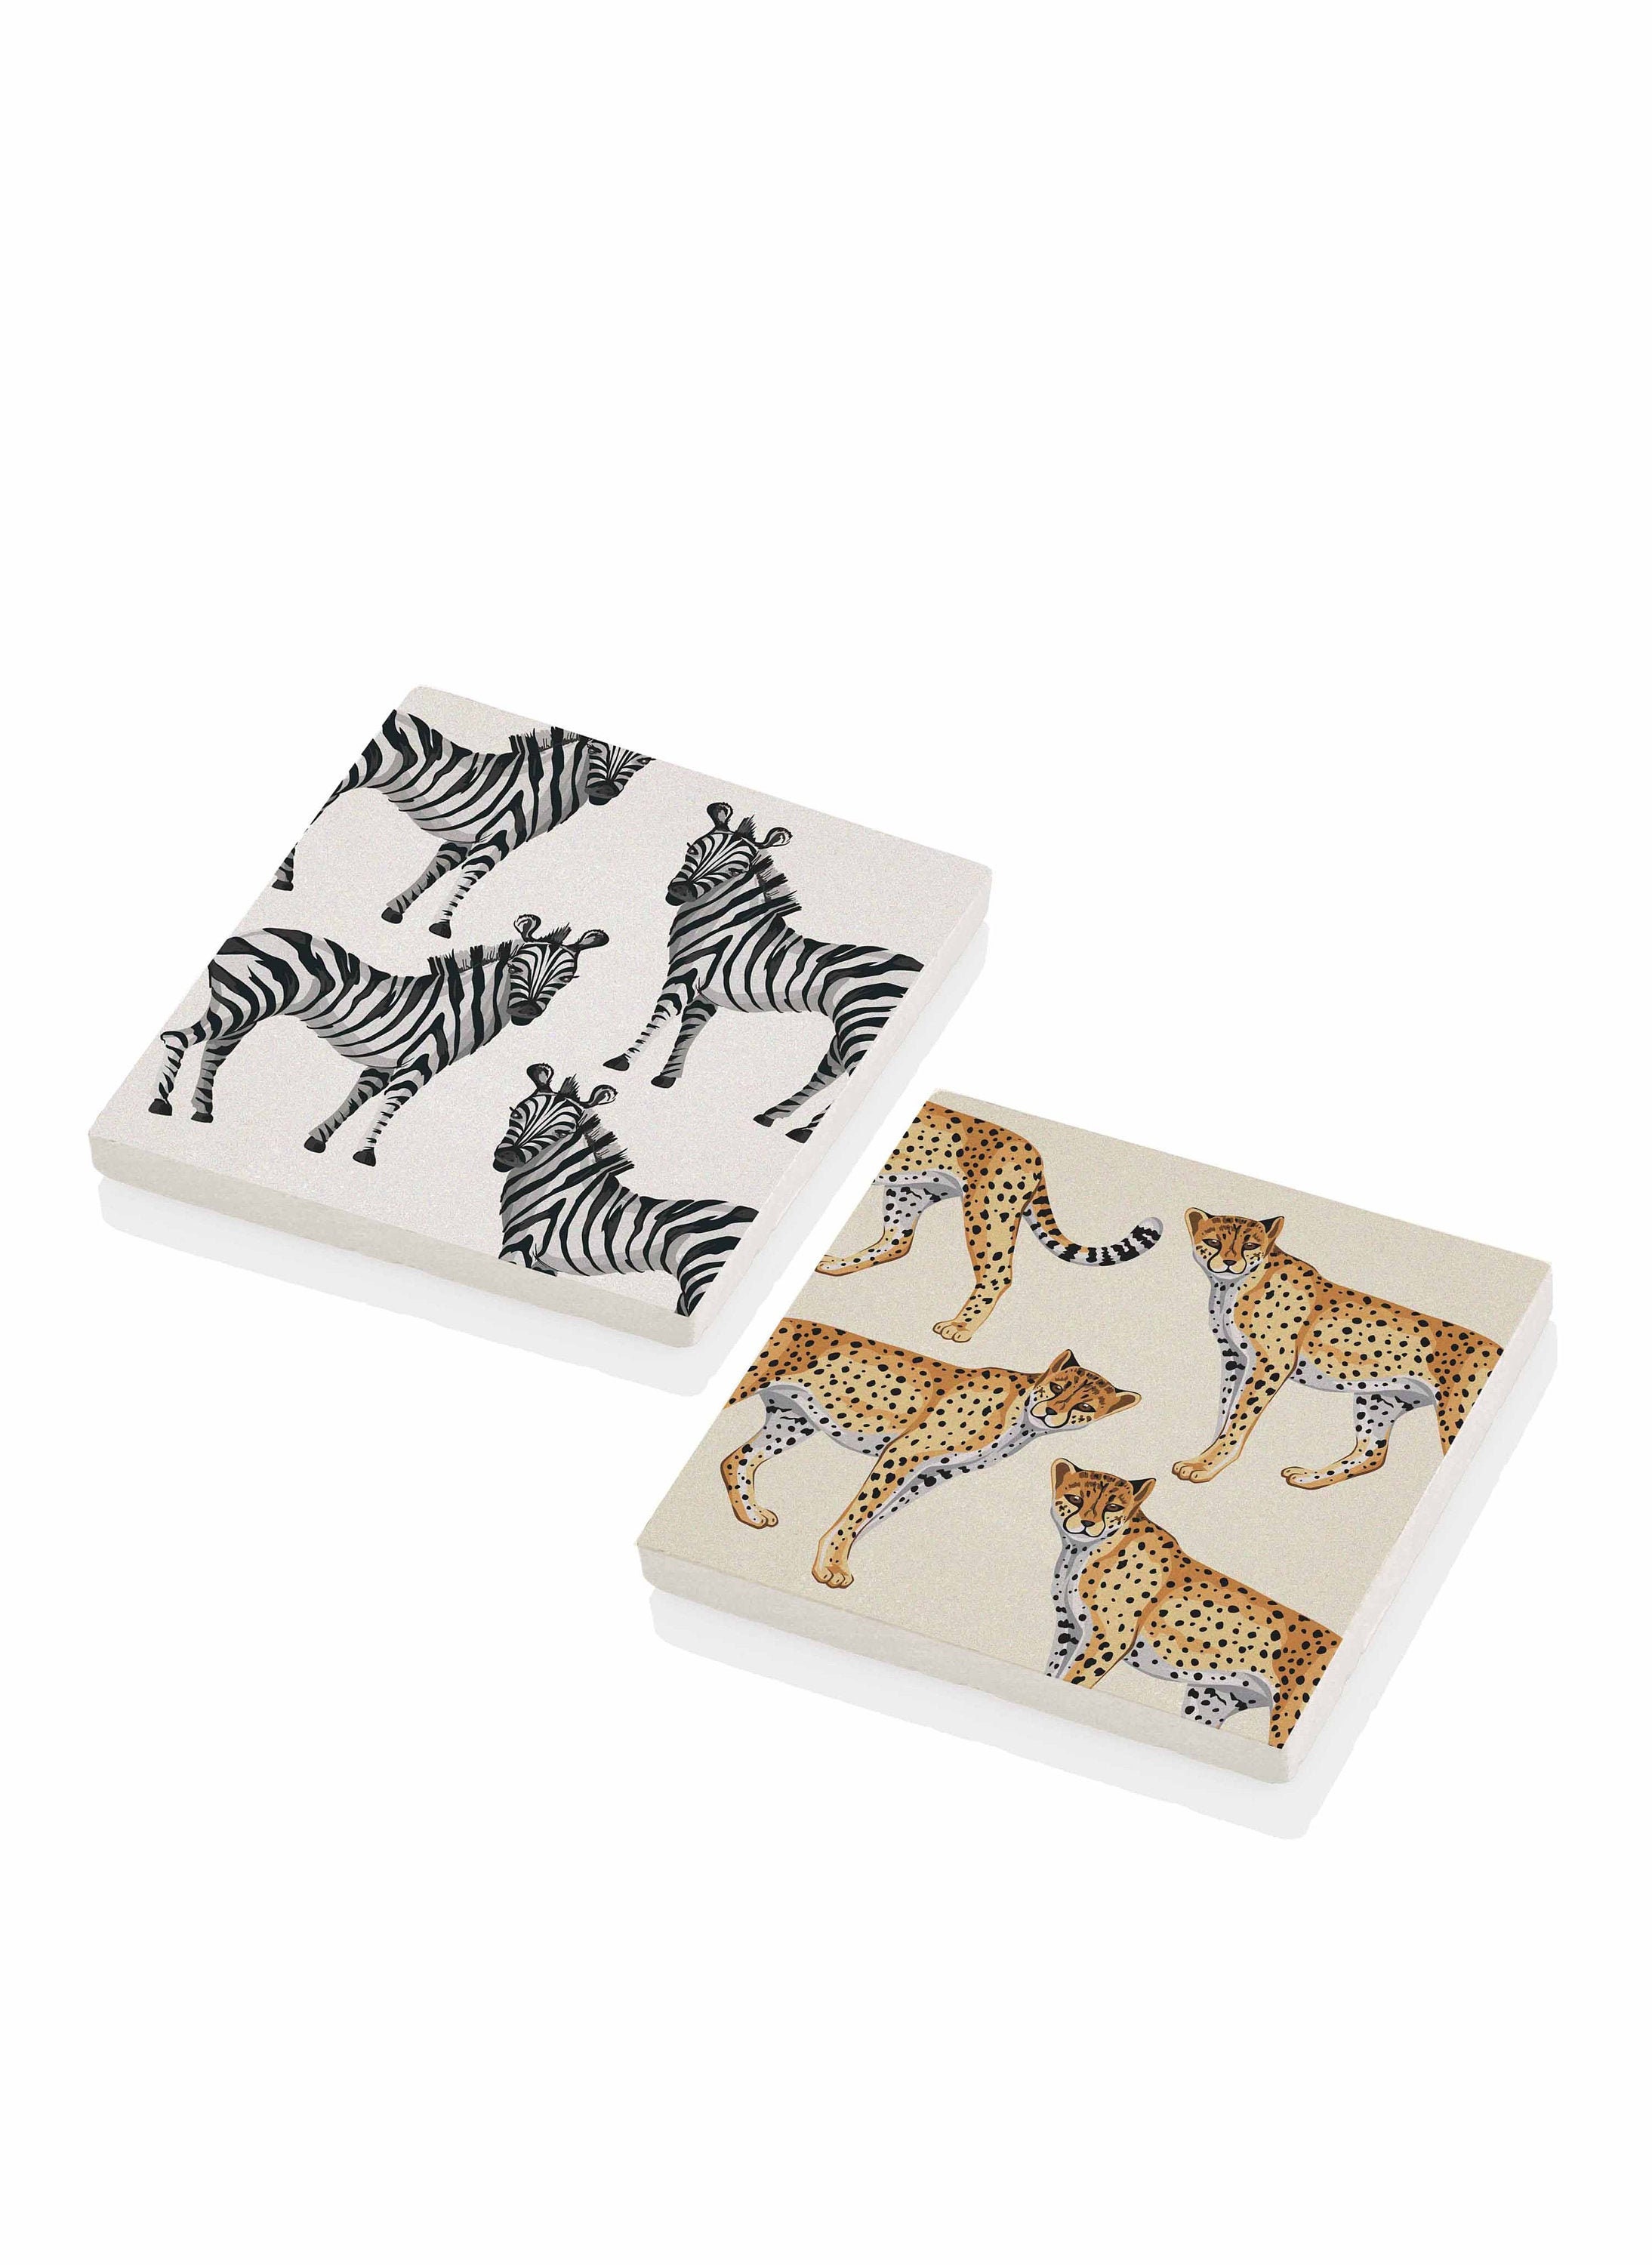 Diamond Art Animal Print Coaster cow, Leopard or Zebra Print 